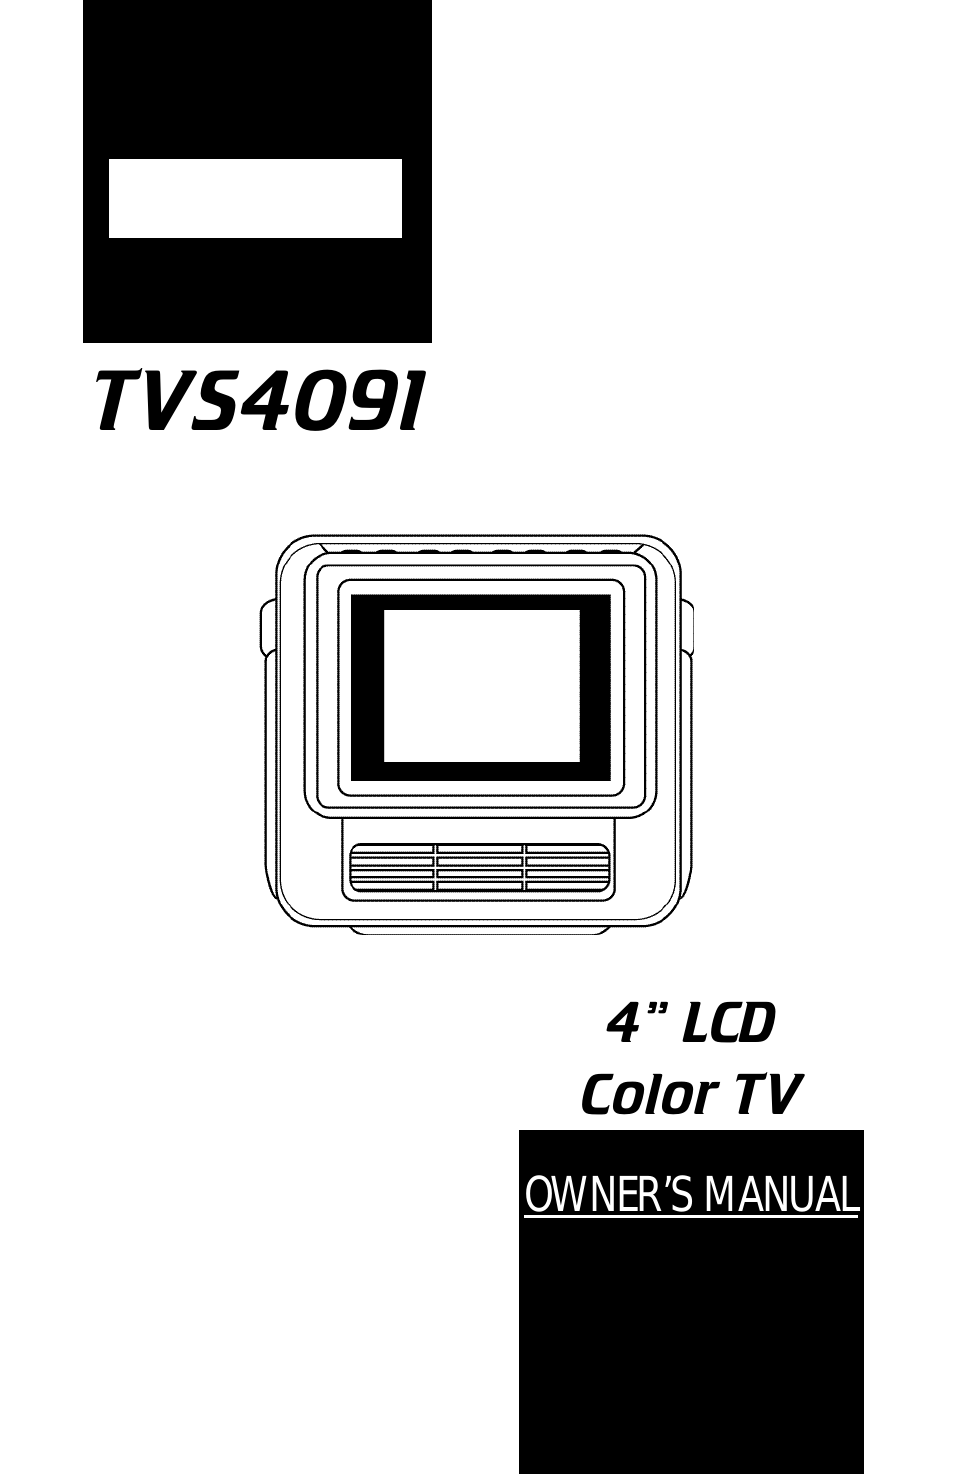 TVS4091